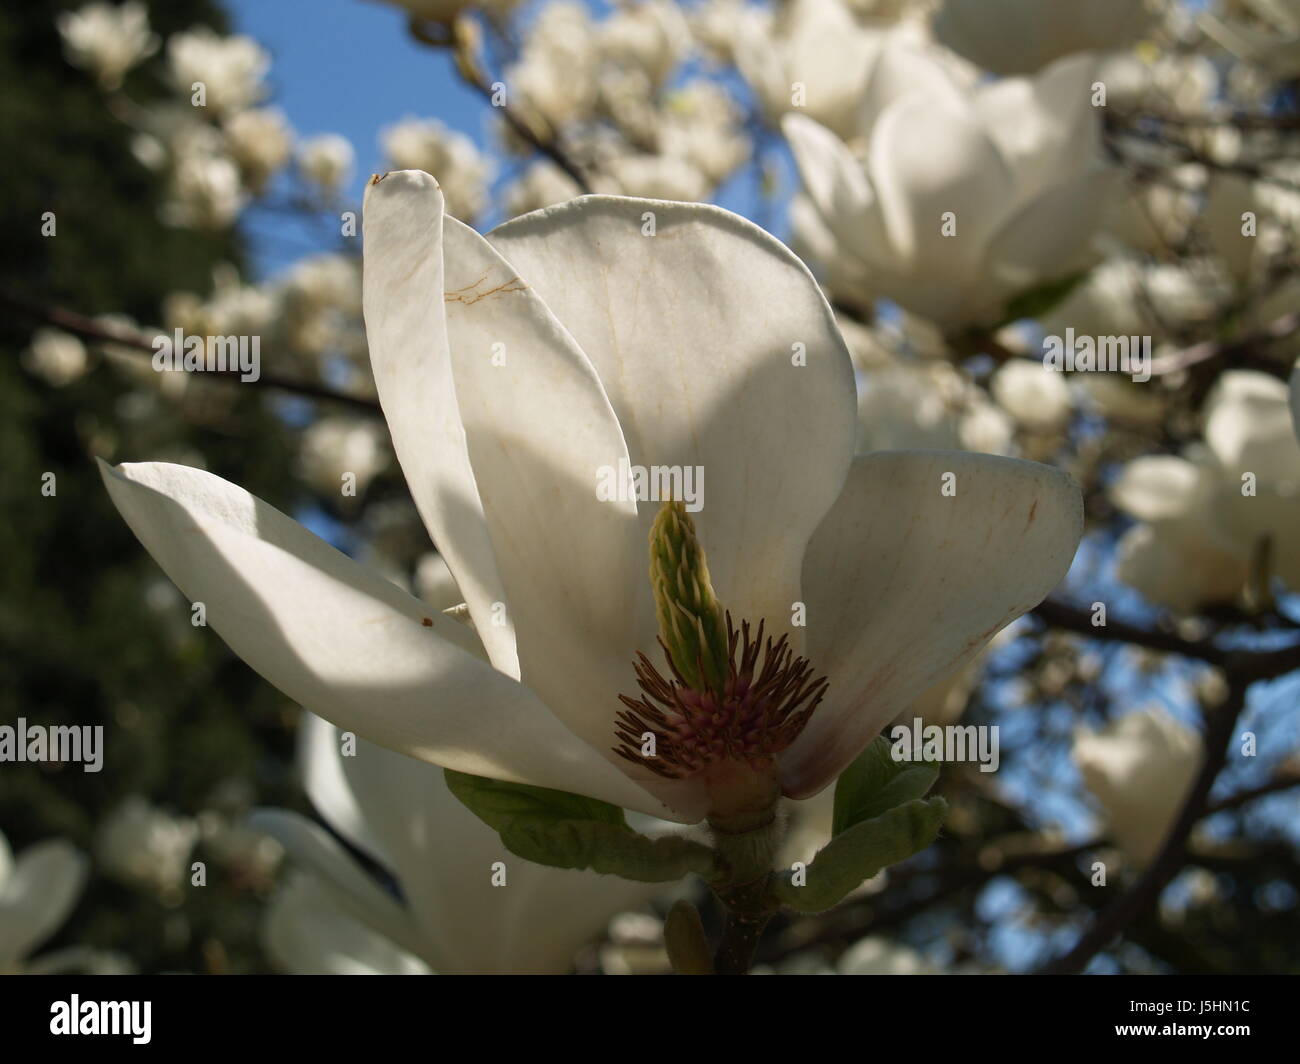 blue tree bloom blossom flourish flourishing stamp pollen flower plant tulip Stock Photo